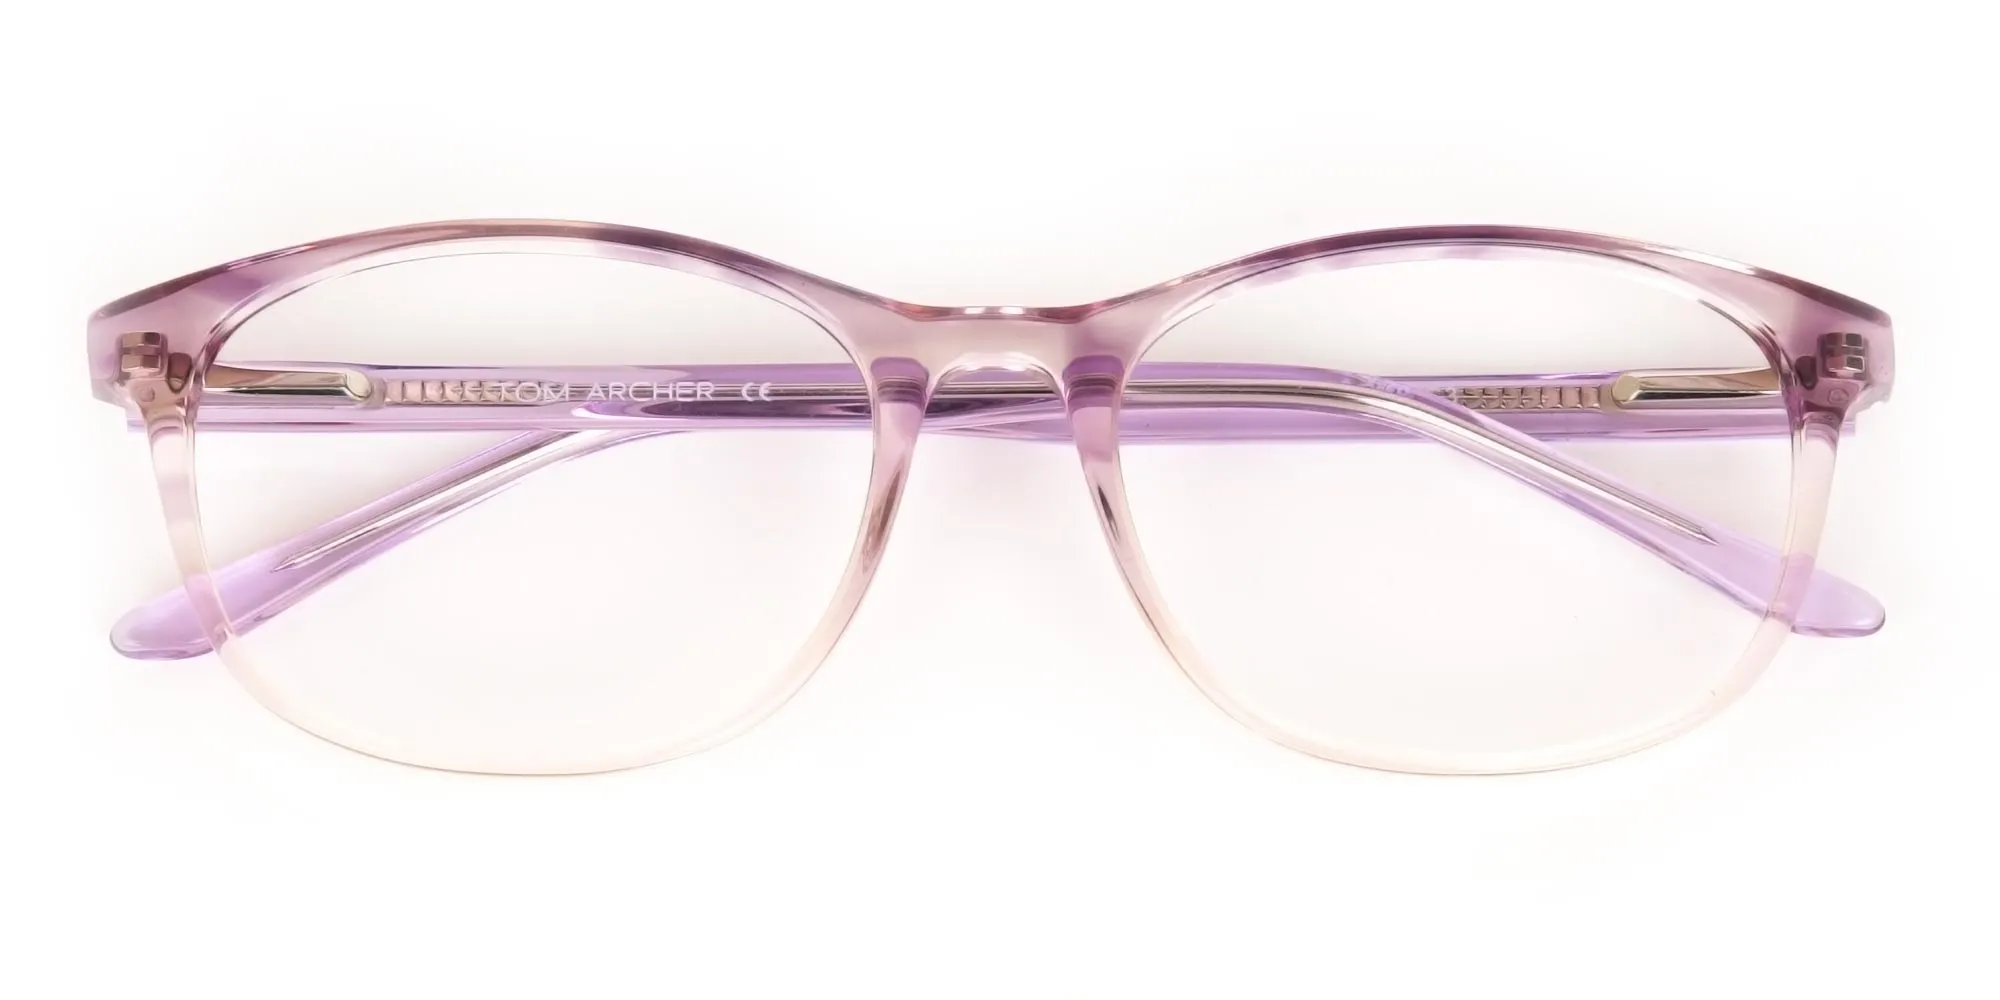  Crystal Purple & Apricot Rectangular Glasses-2